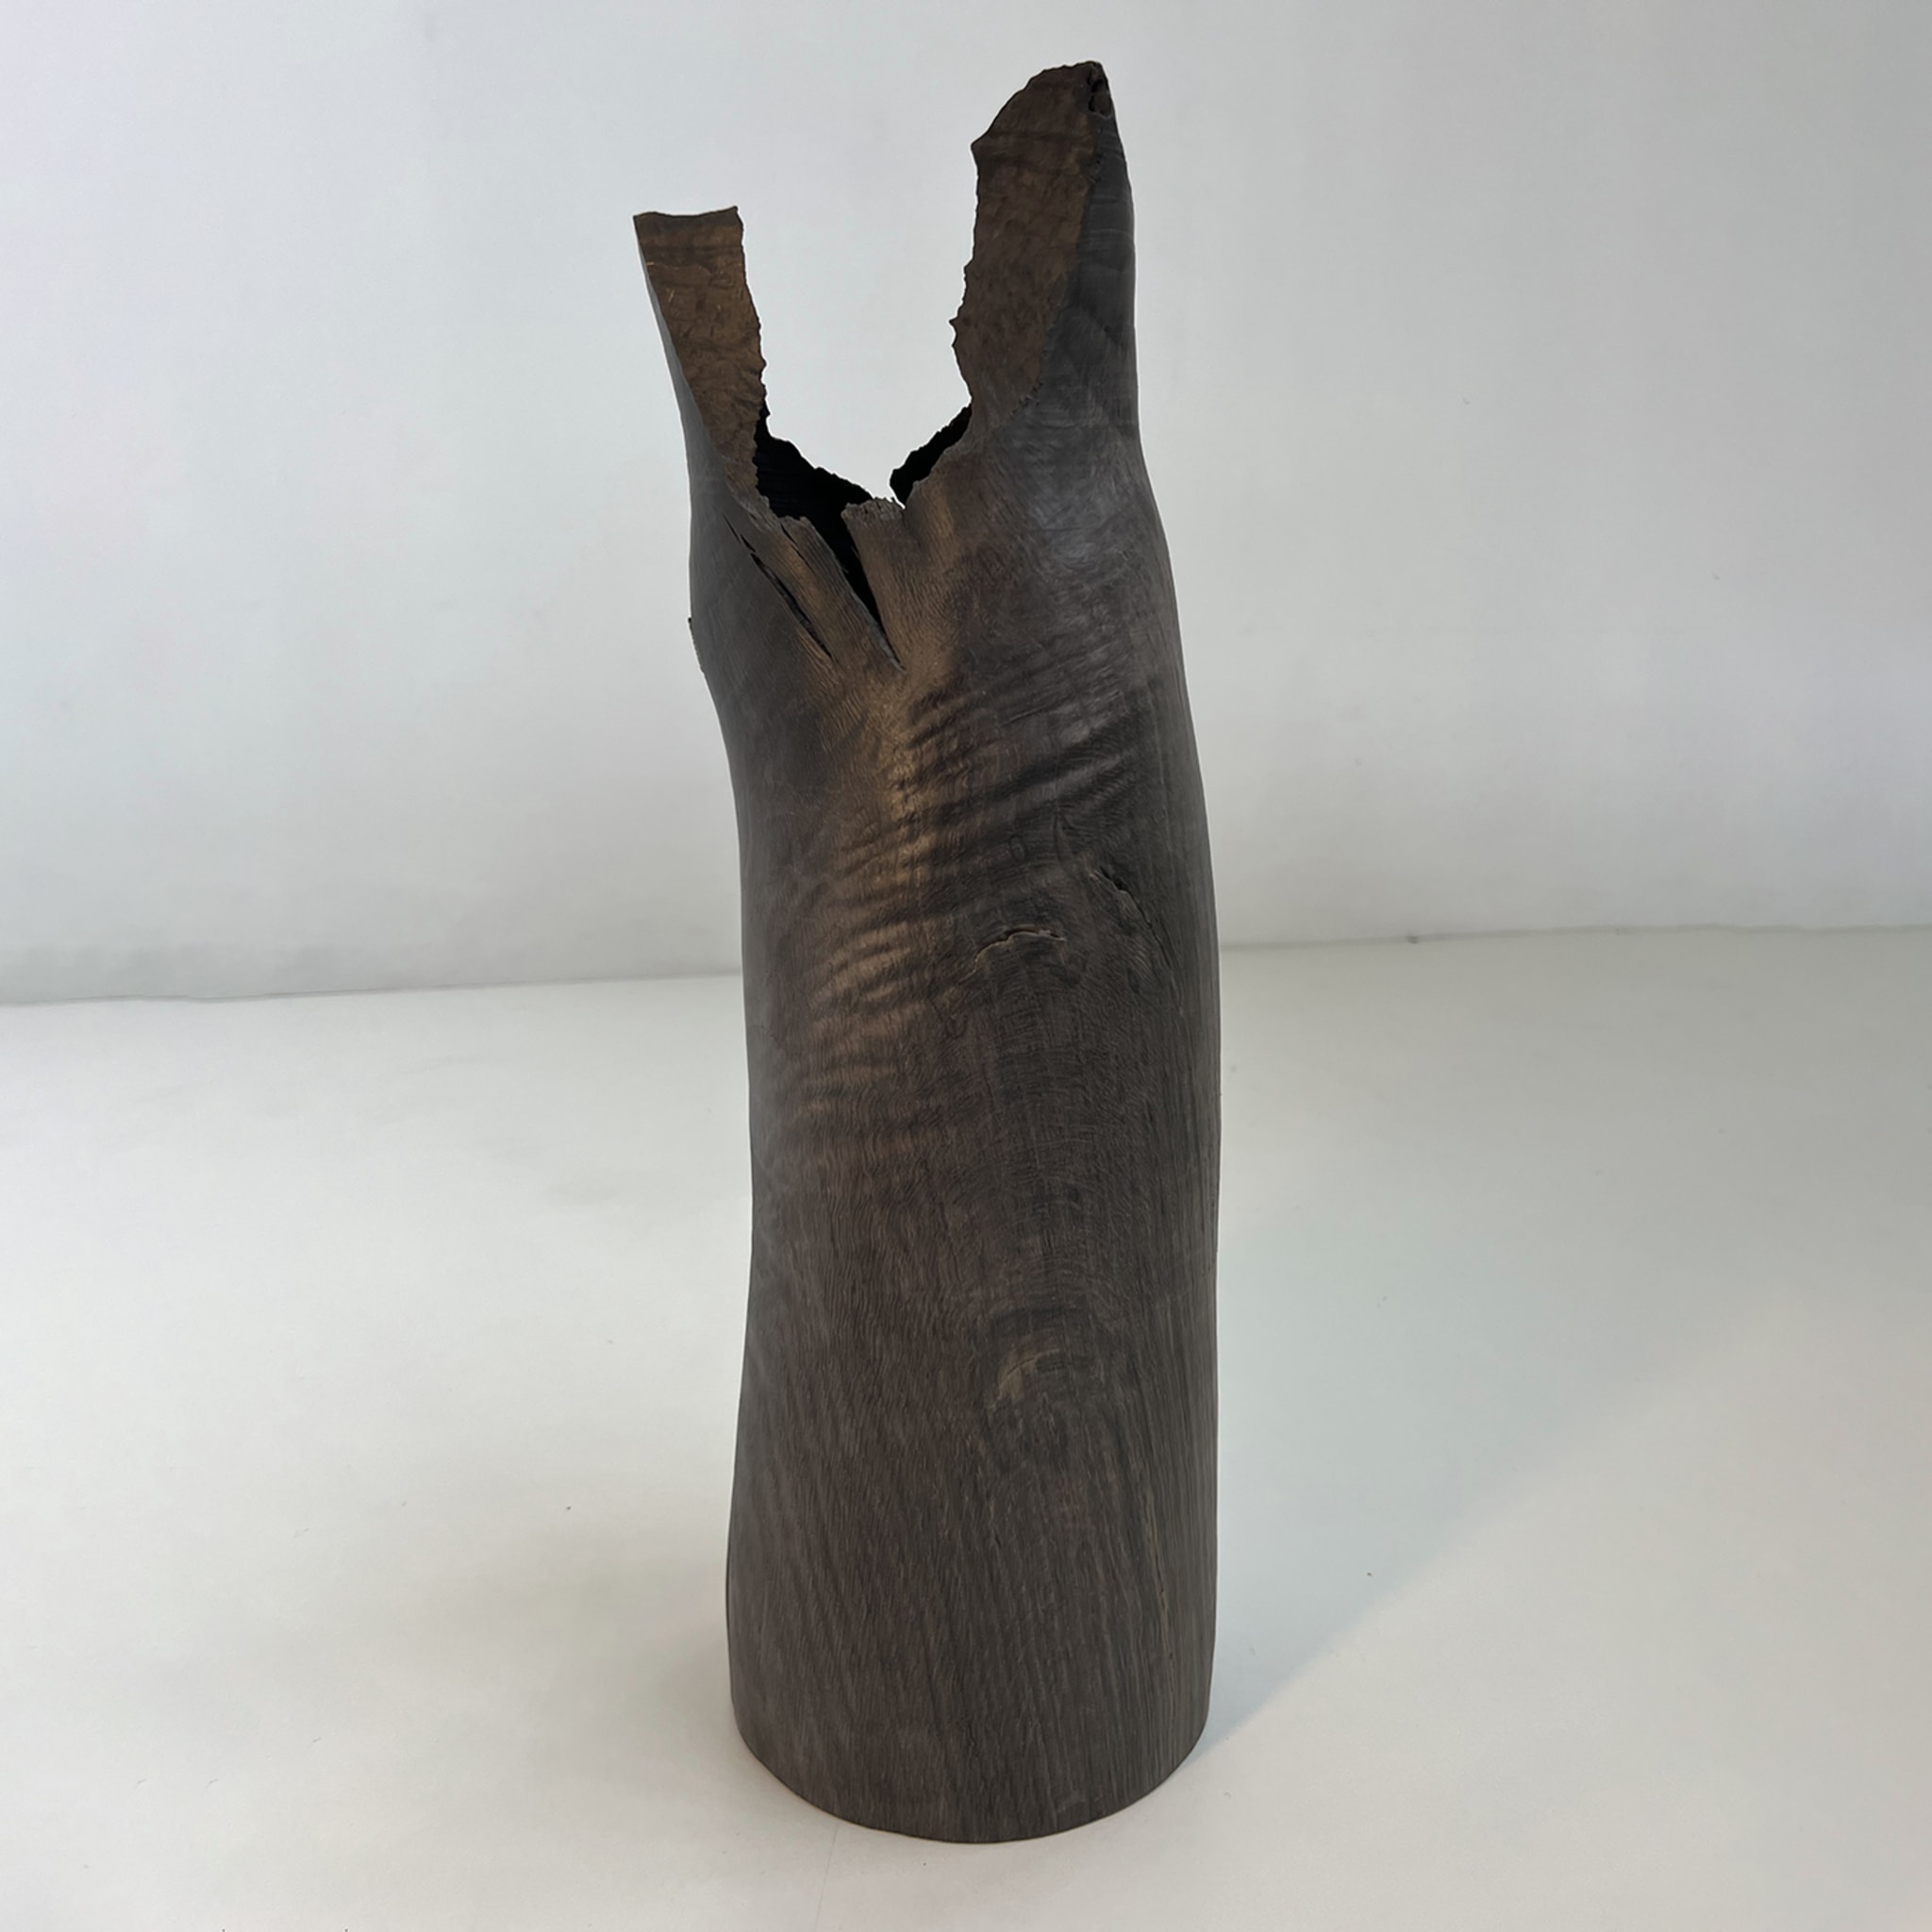 Fossil Oak Hollow Vase #3 - Alternative view 1